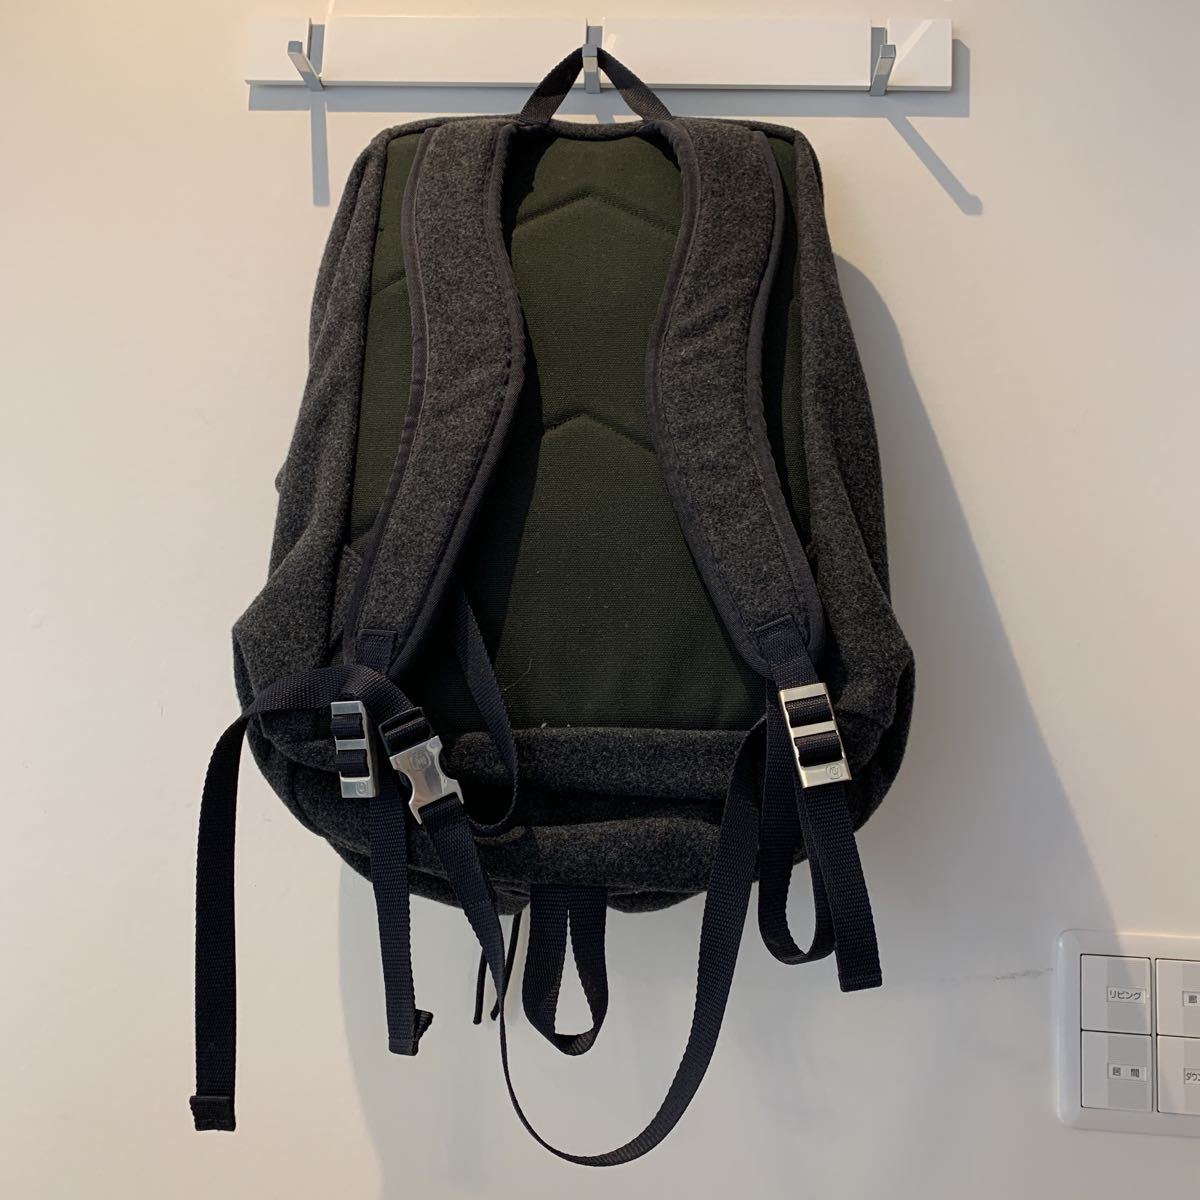  Neighborhood × Porter collaboration now become ultra rare backpack gray Prada type rucksack high capacity Fujiwara hirosi reverse side ..